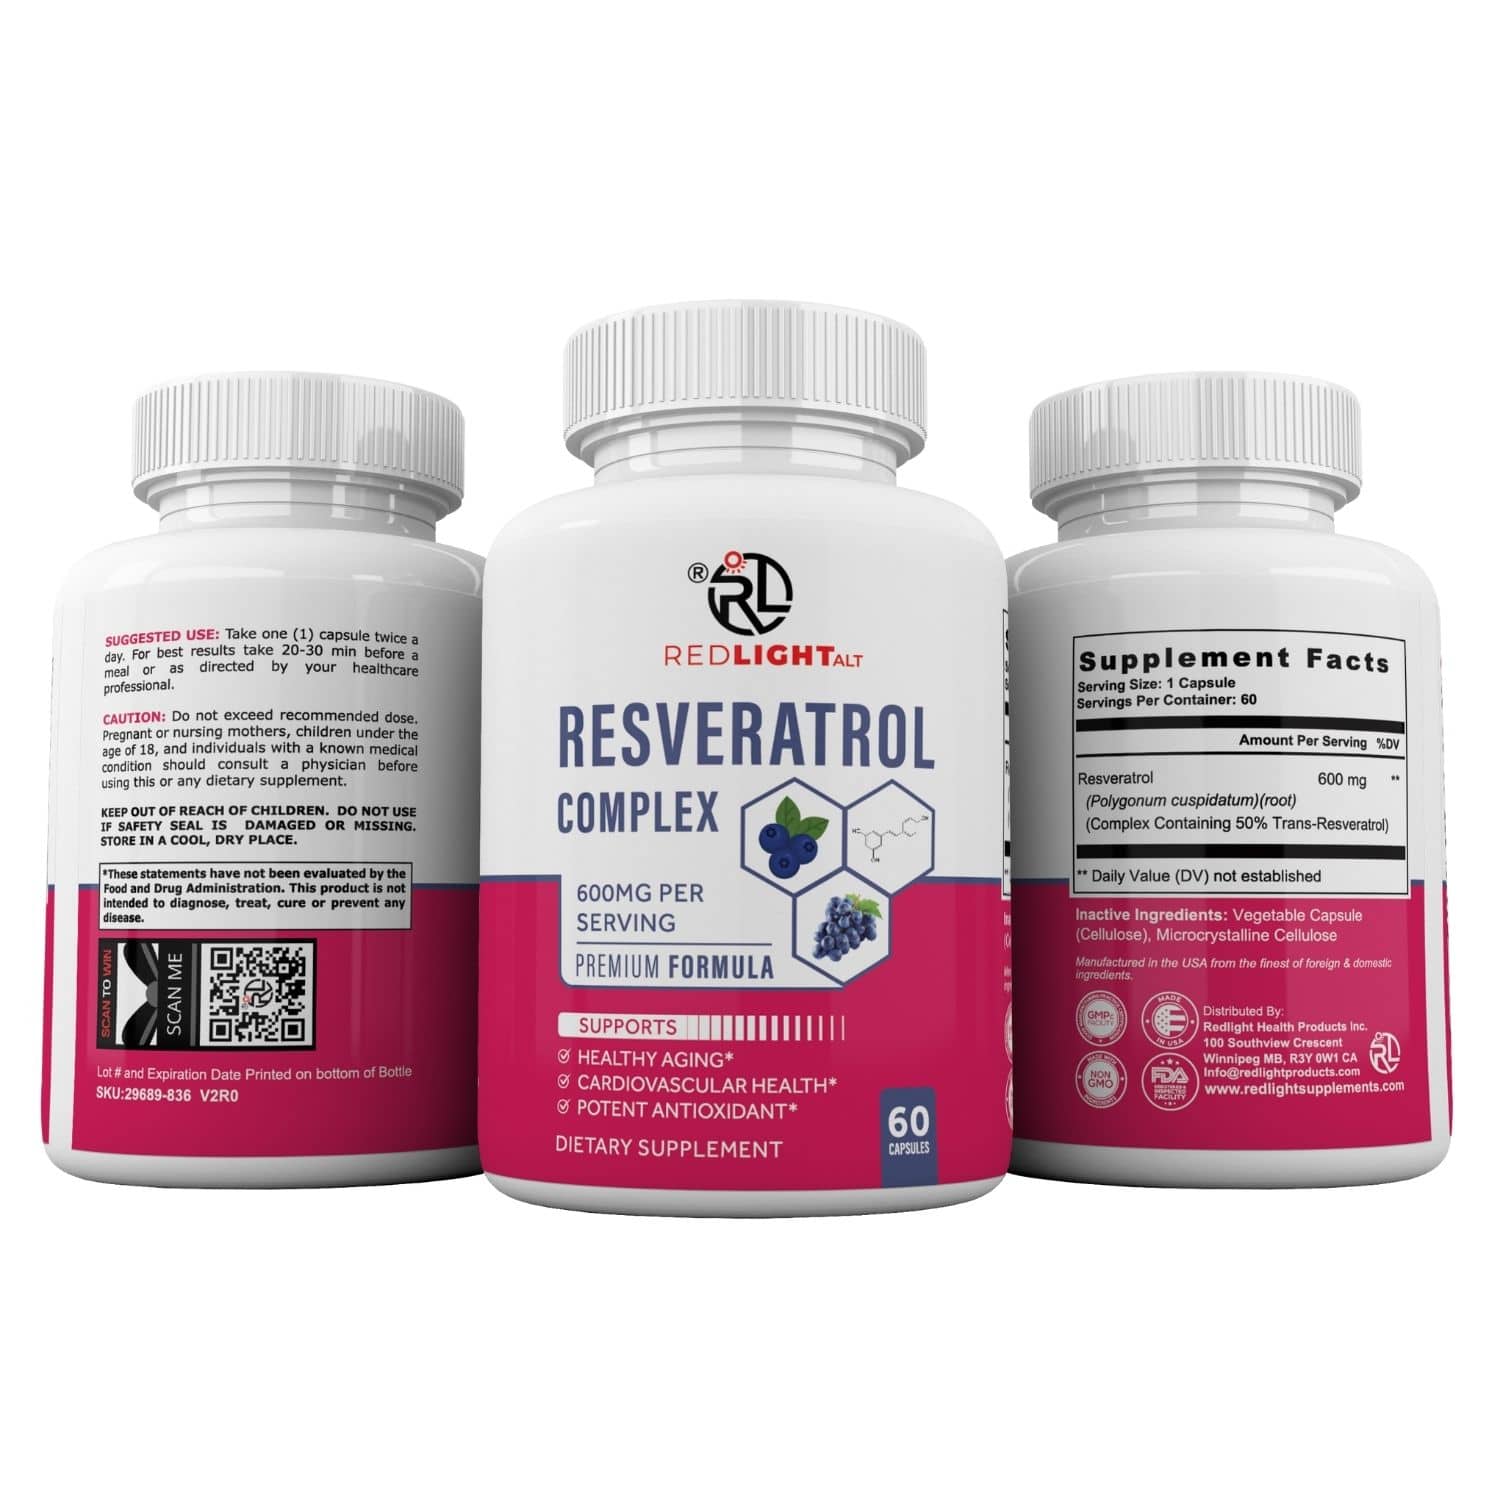 Redlight ALT Resveratrol supplement for high cholesterol